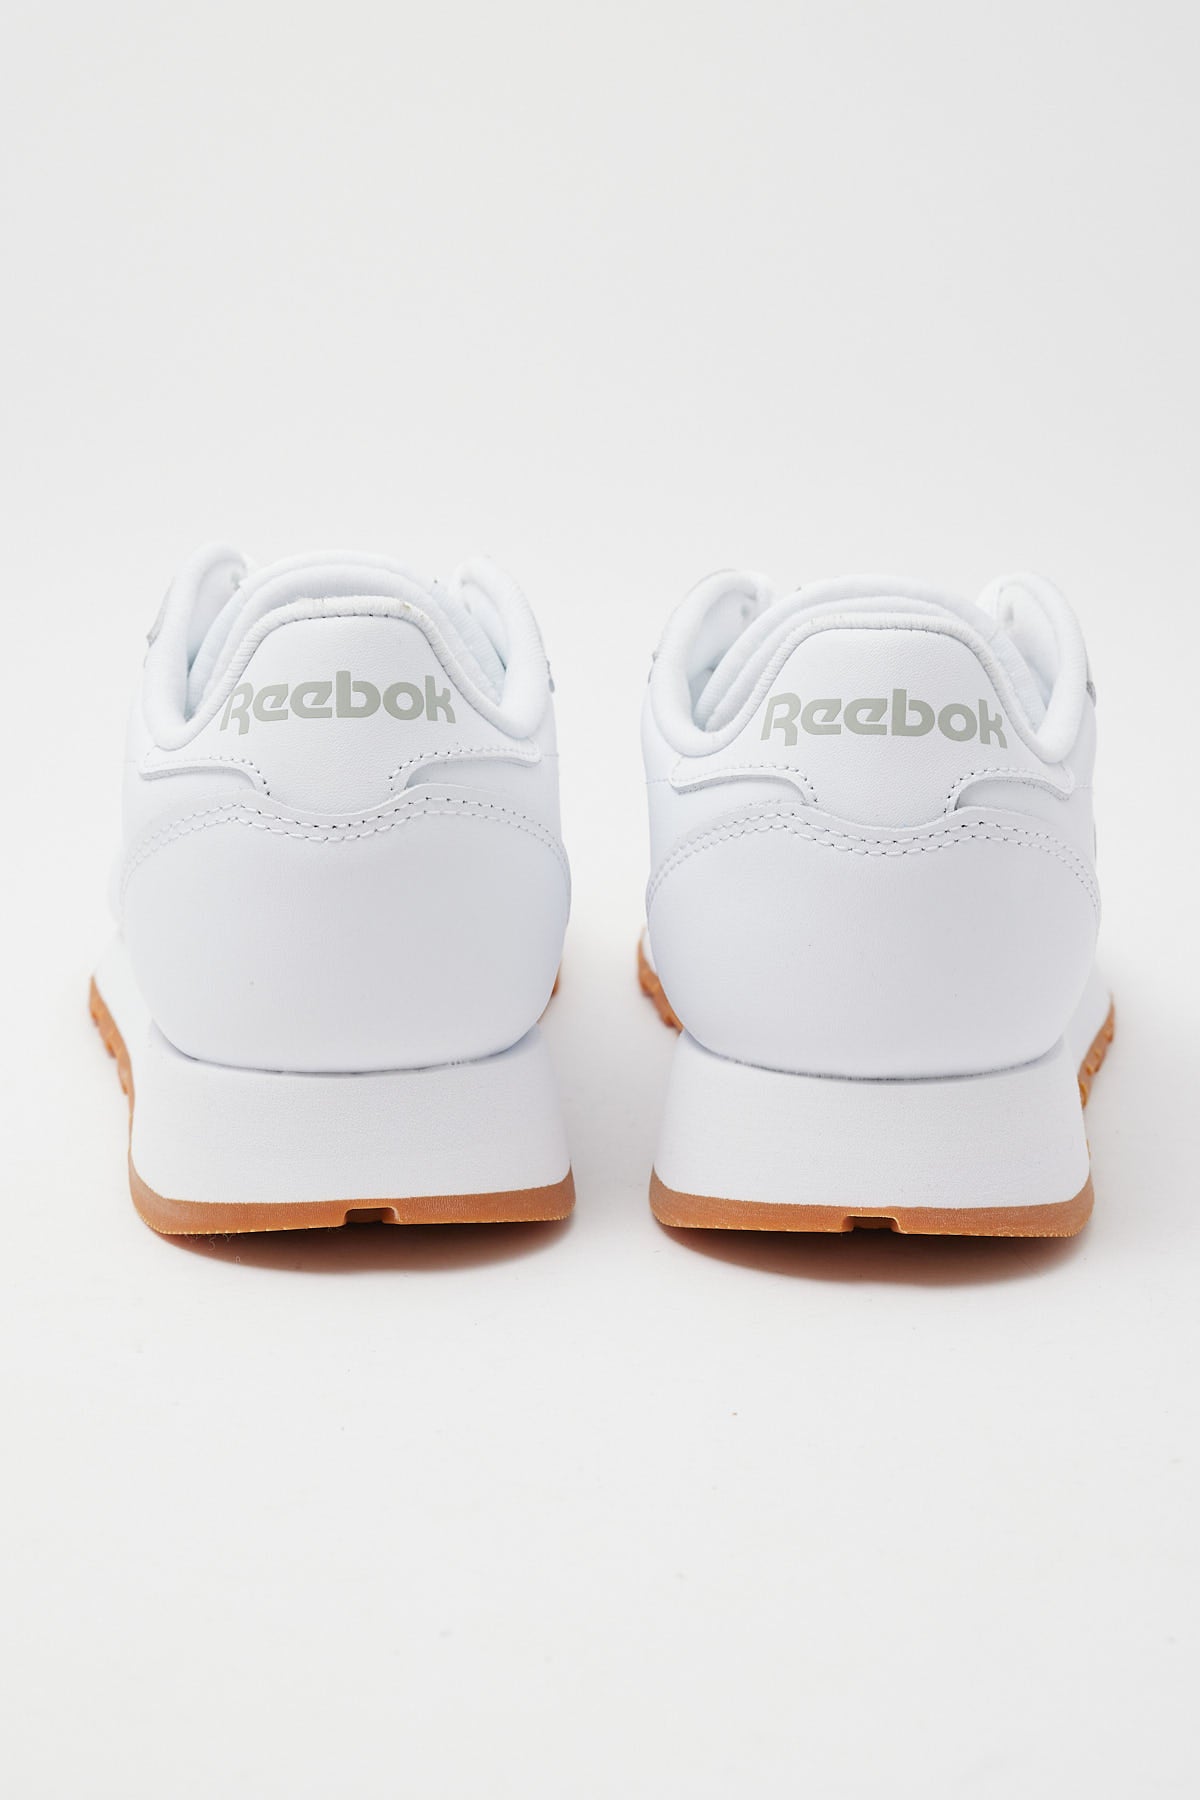 Reebok Classic Leather White Gum – Universal Store